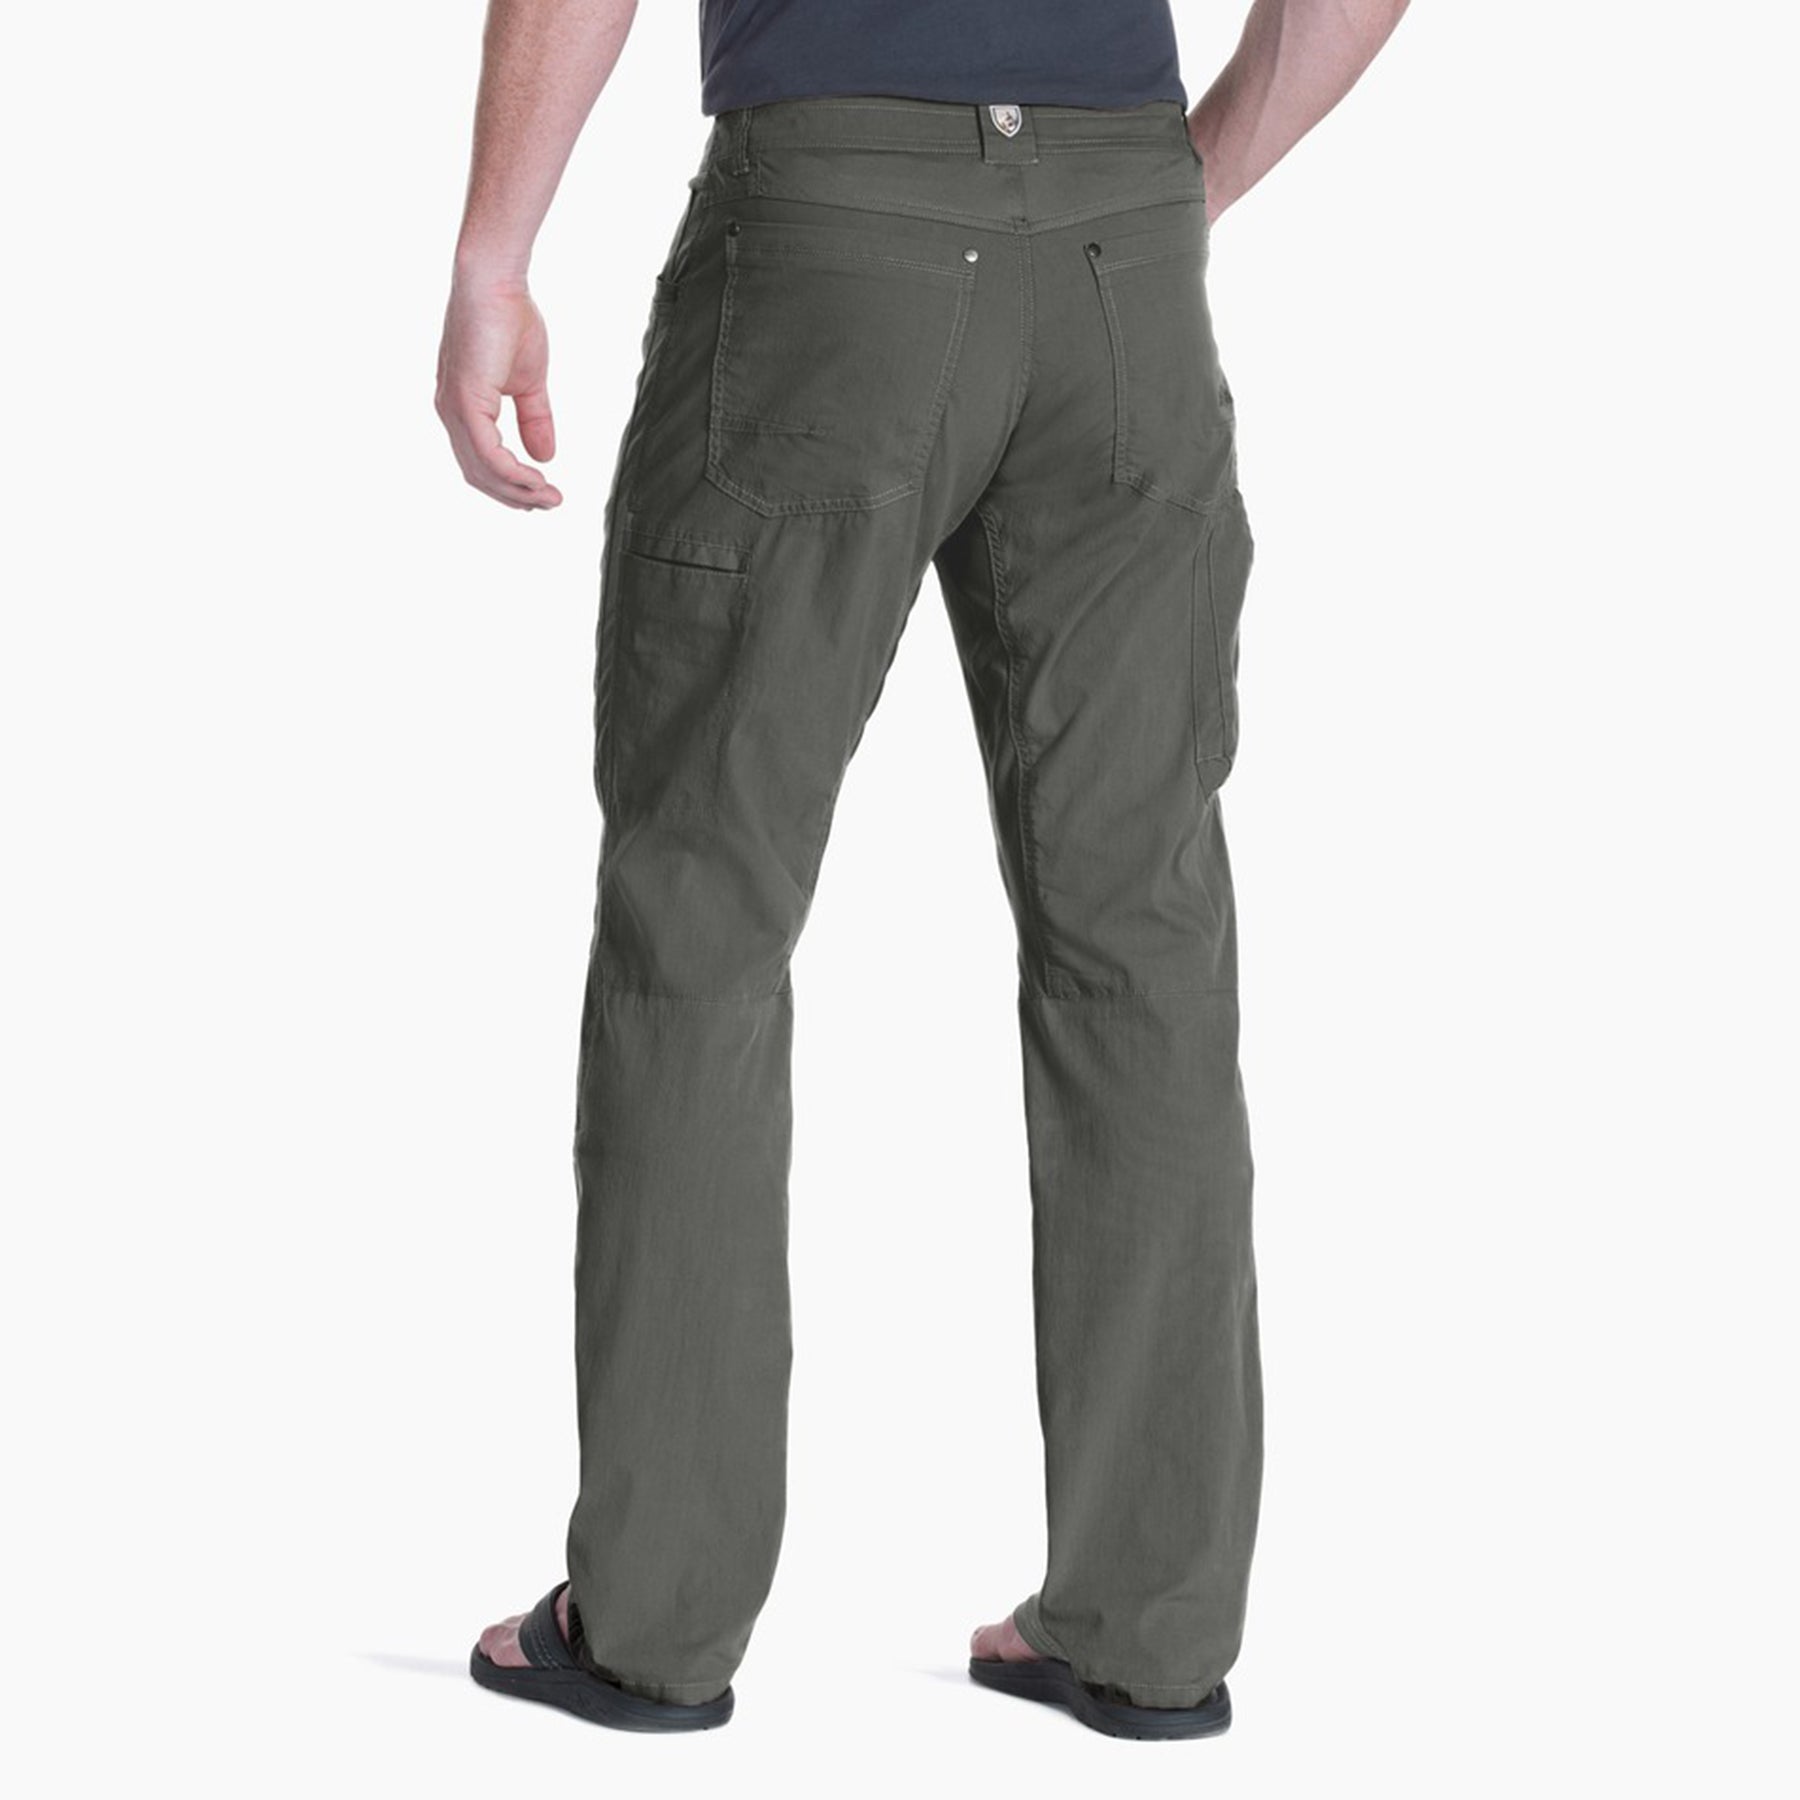 kuhl radikl pants mens on model back view in color green